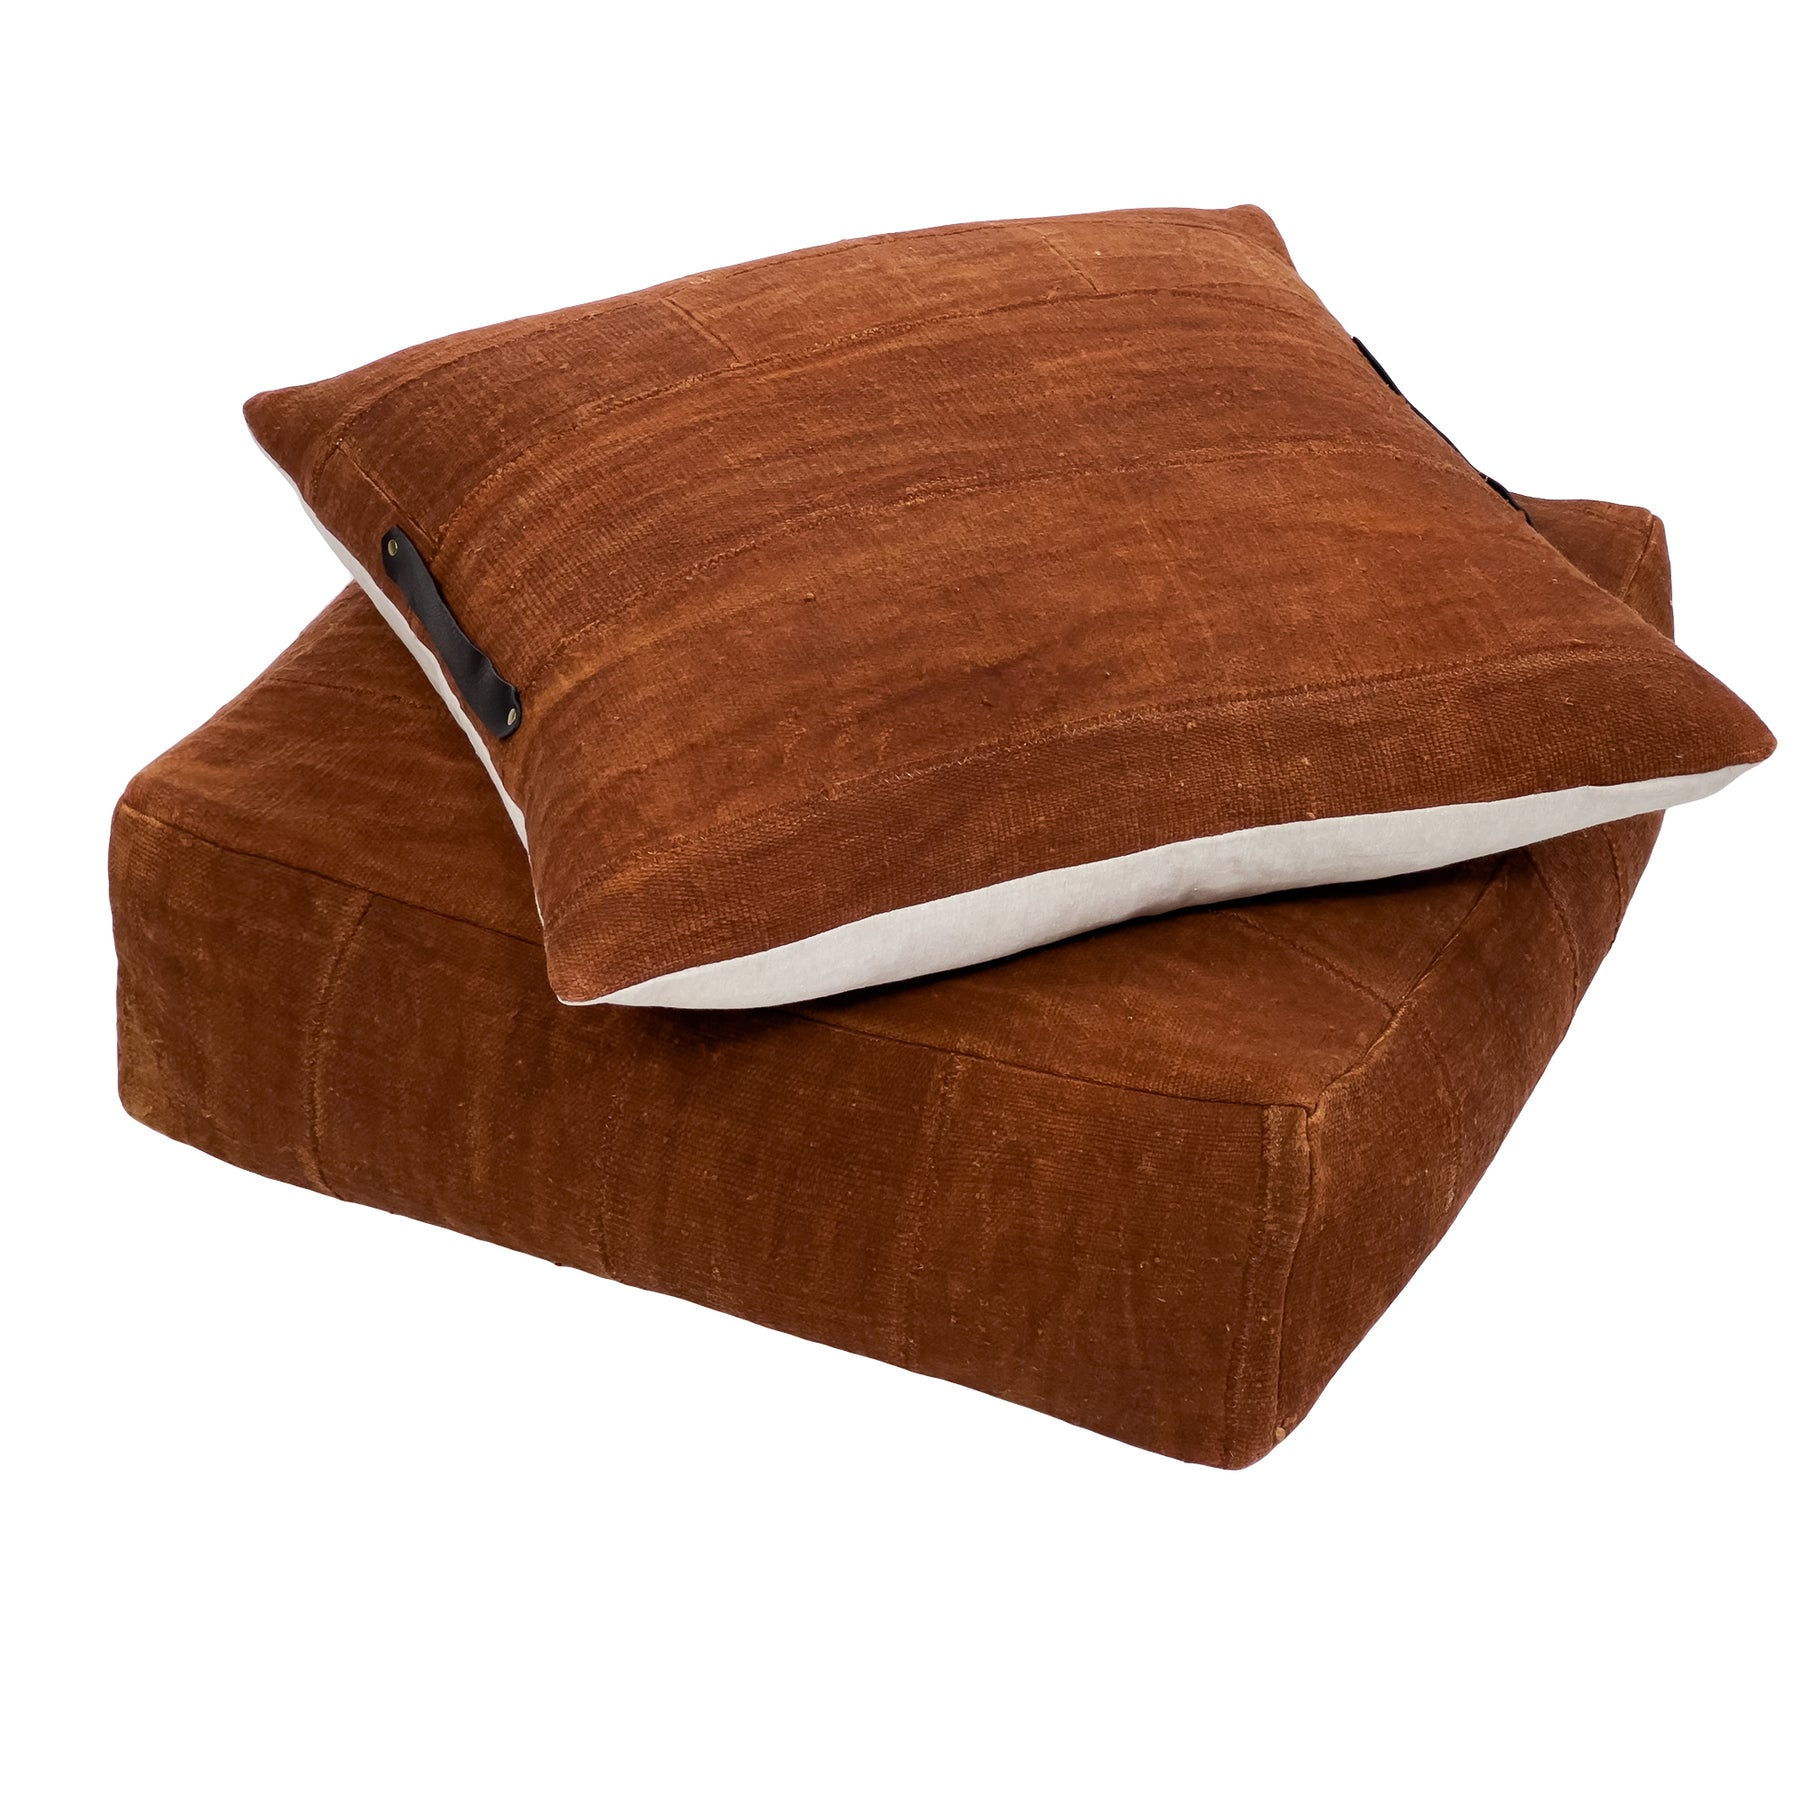 Rock Pillows  Modern bean bags, Floor cushions, Floor pillows